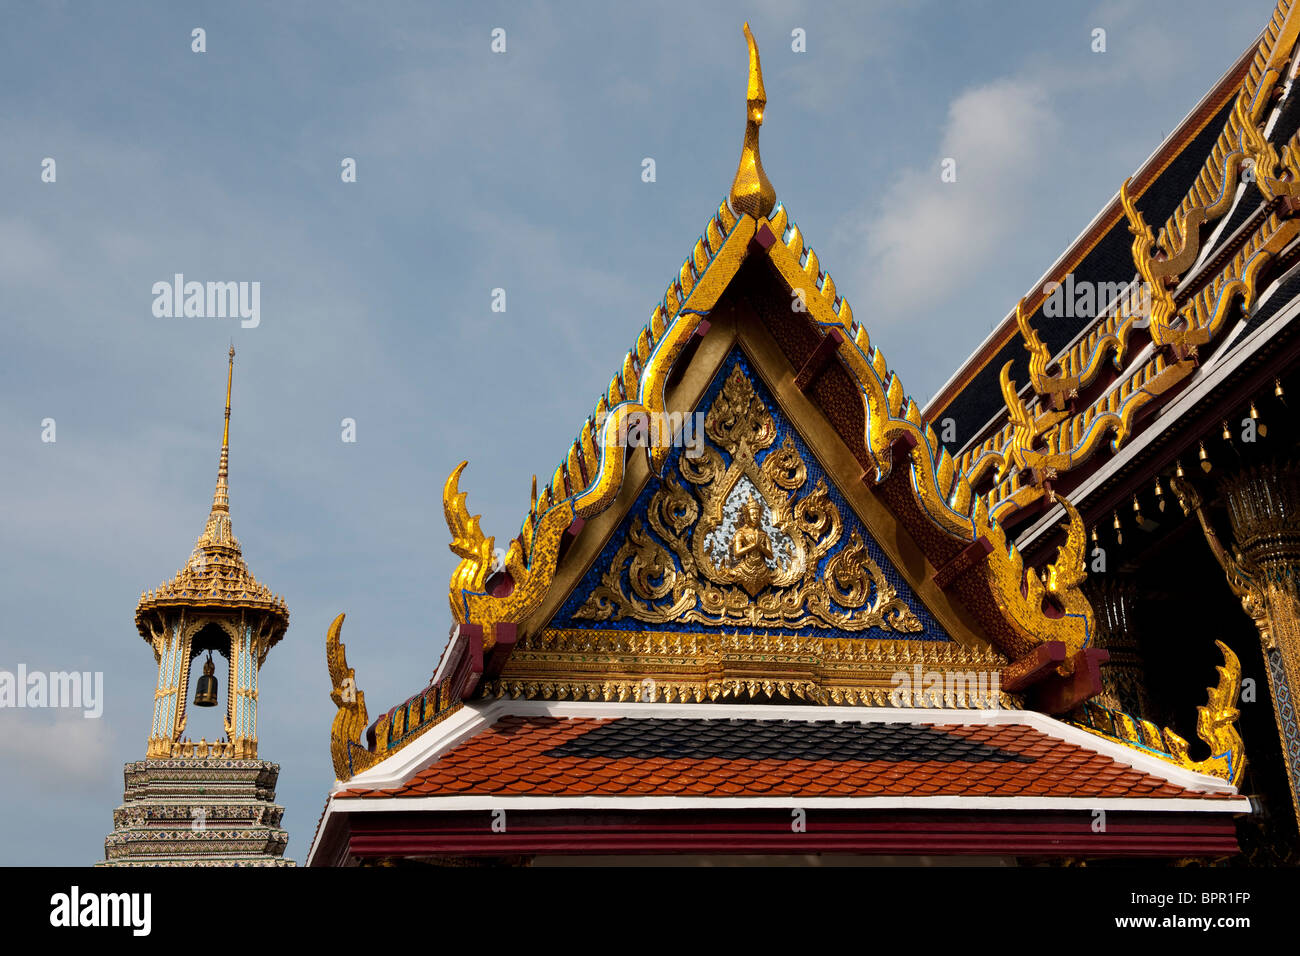 ornate gold-lined roof, Grand Palace, Bangkok, Thailand Stock Photo